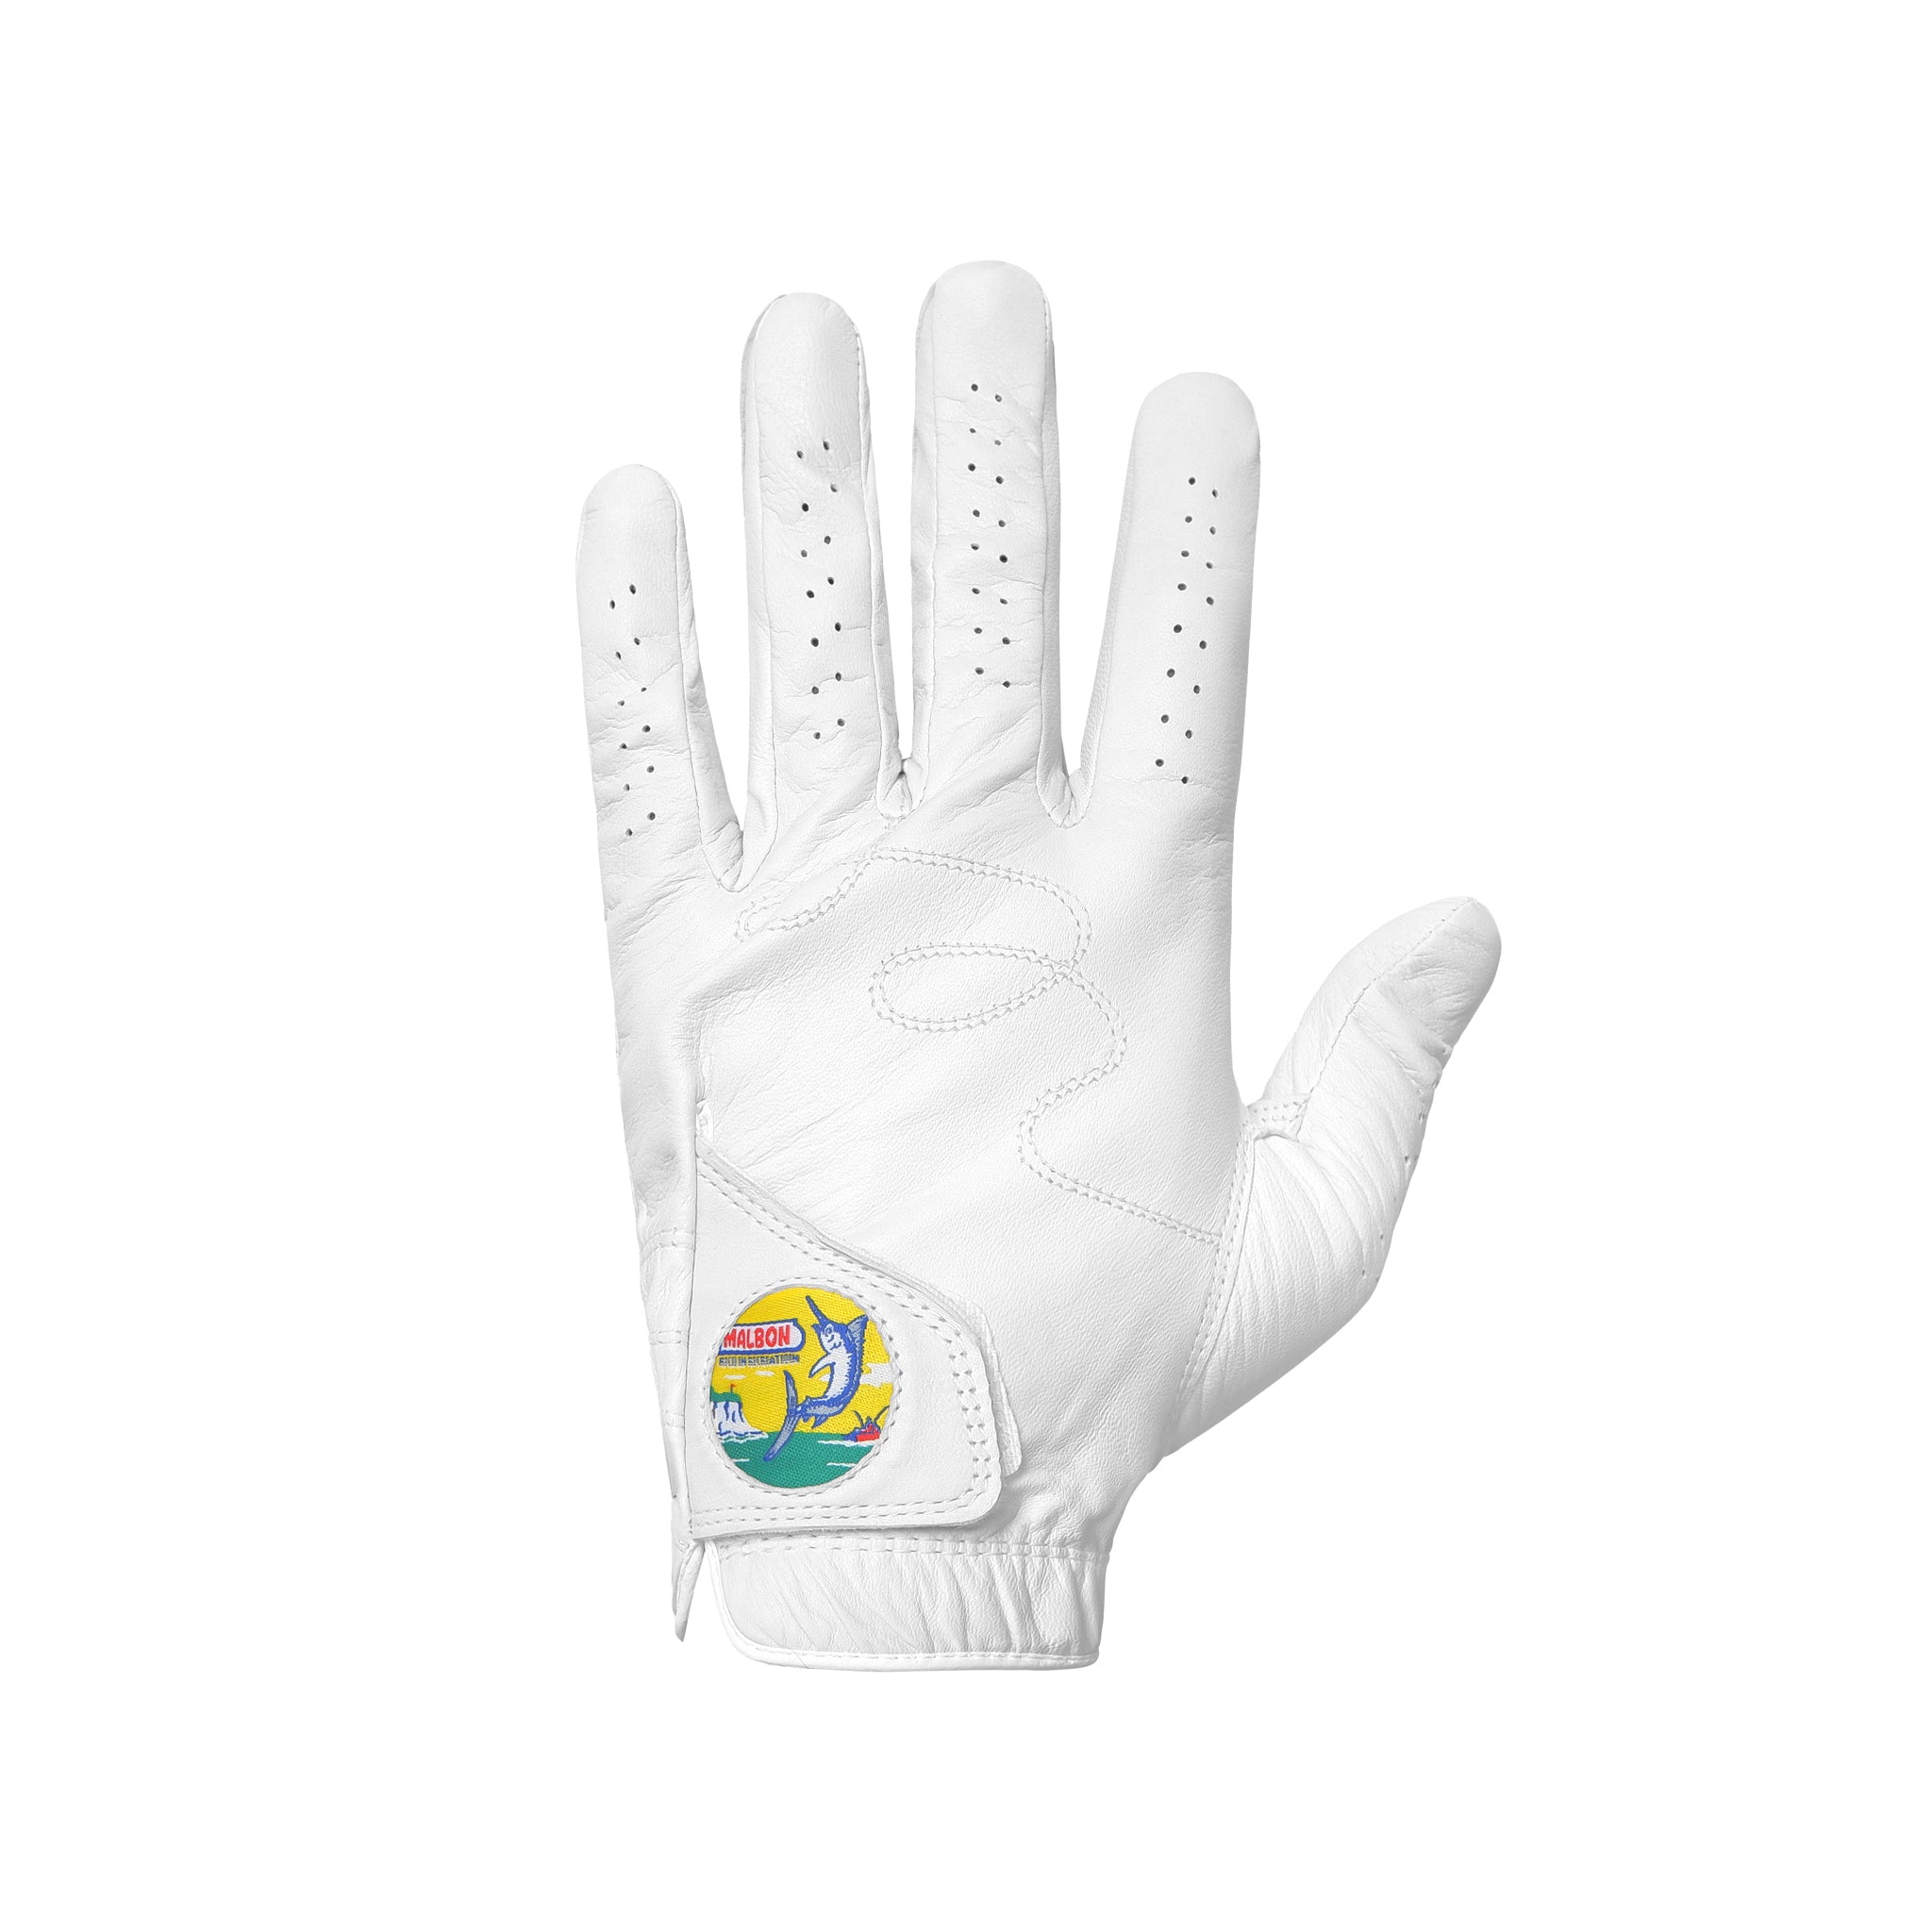 Gloves – Malbon Golf